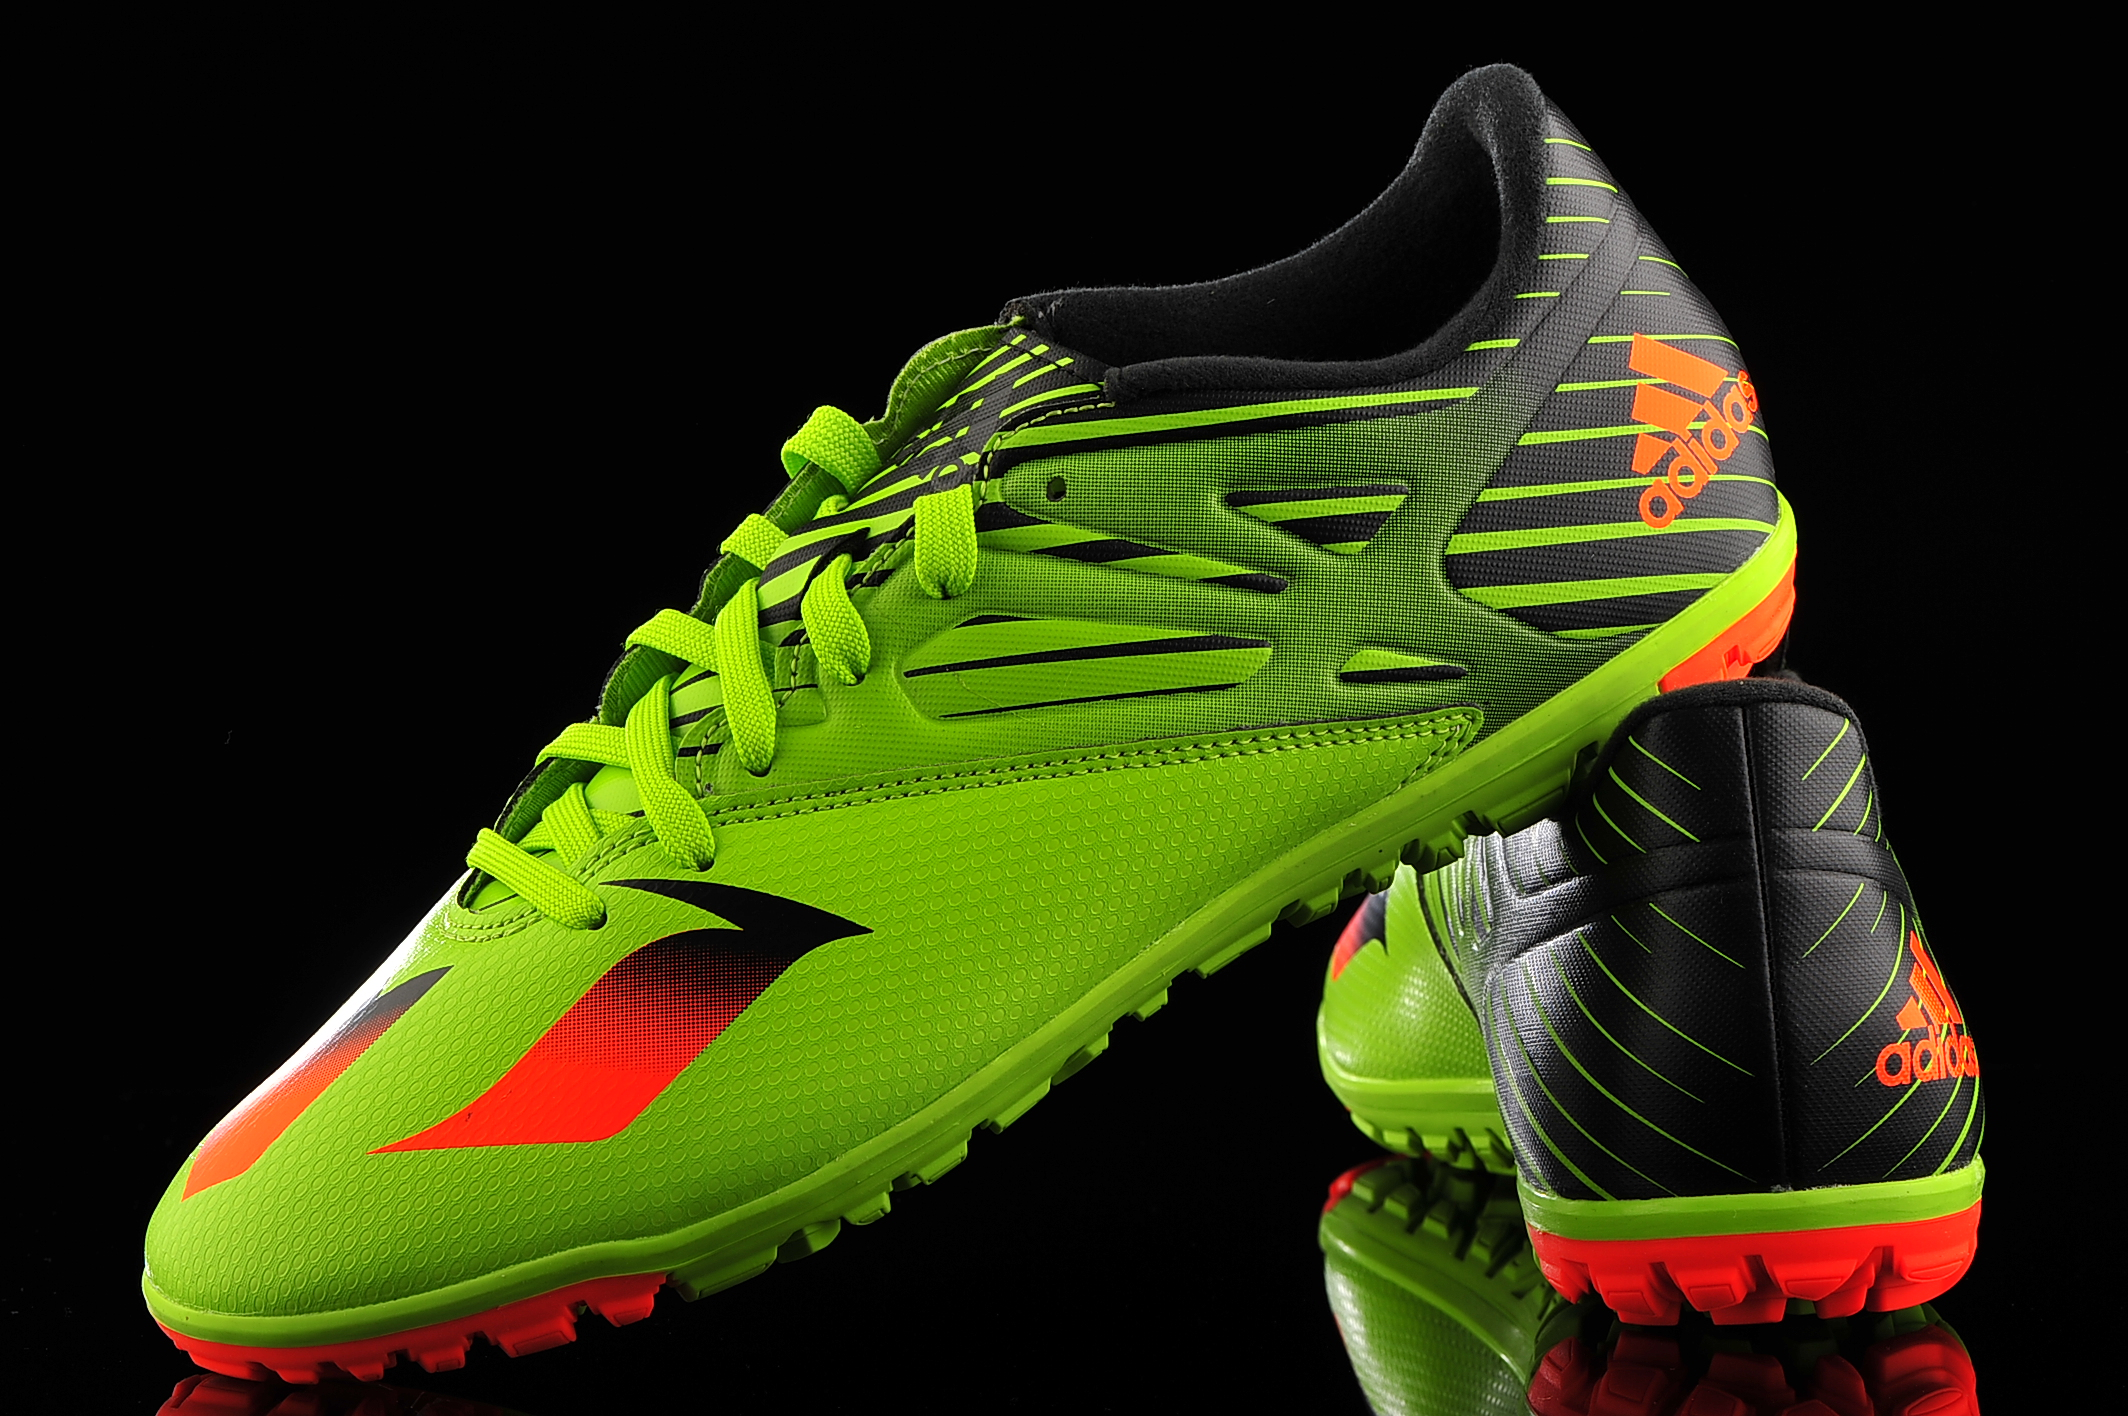 Adidas Messi 15 3 Tf S R Gol Com Football Boots Equipment